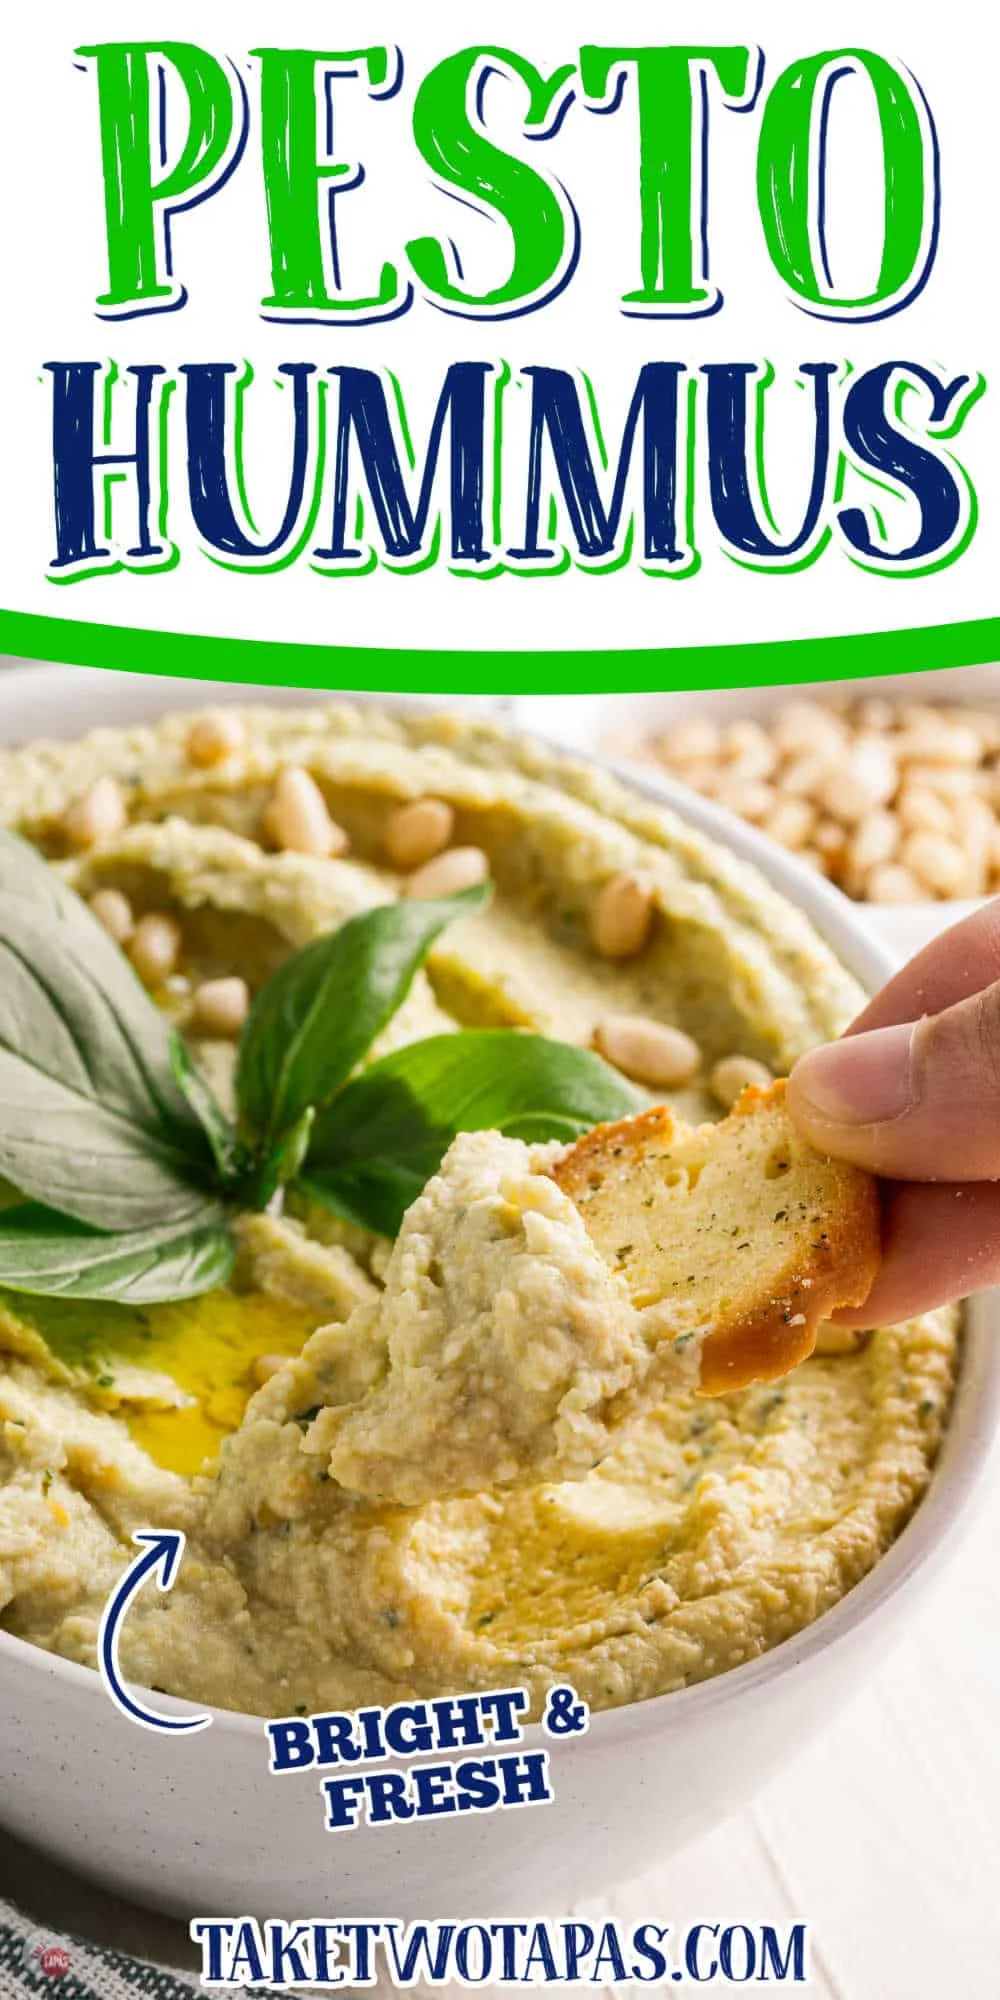 scoop of hummus with text "basil pesto hummus"